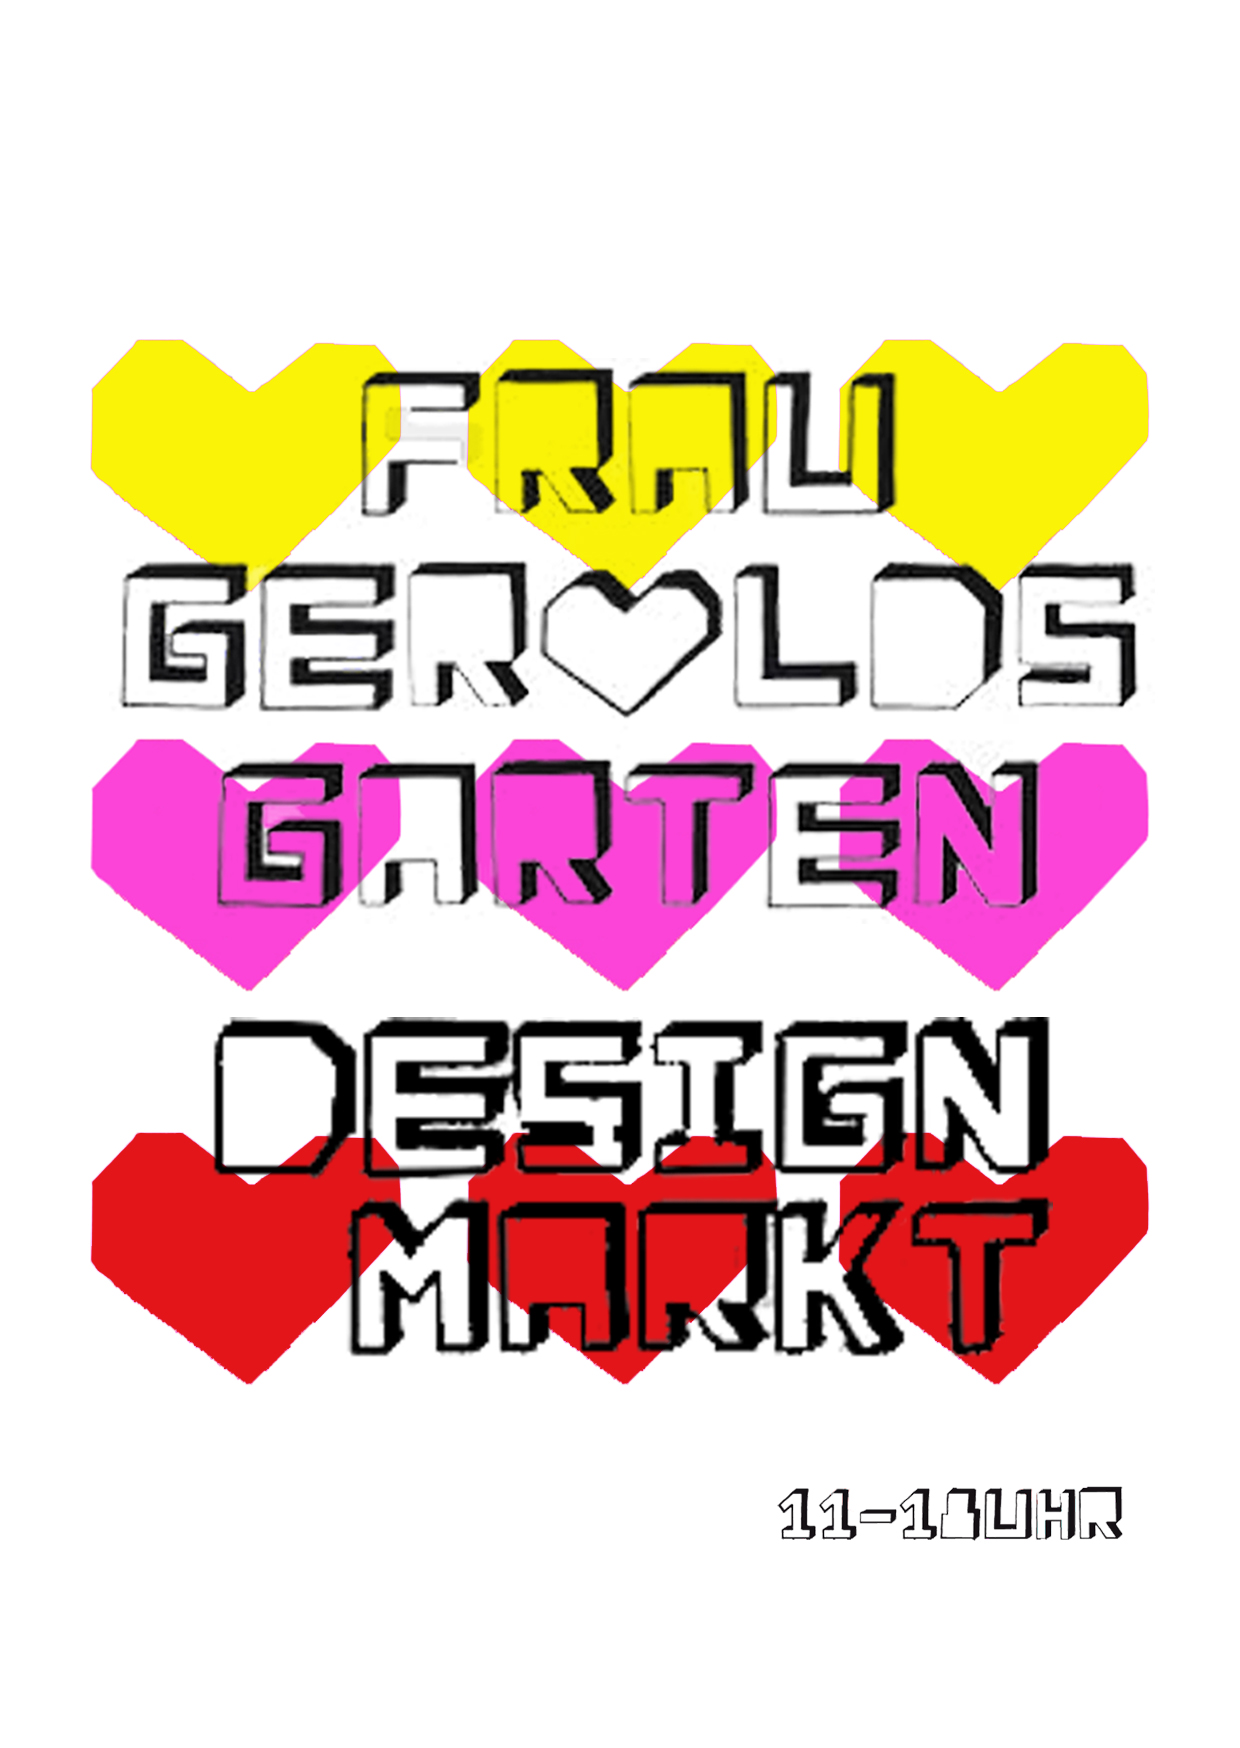 Design Markt bei Frau Gerold // Samstag 25. Mai 2019